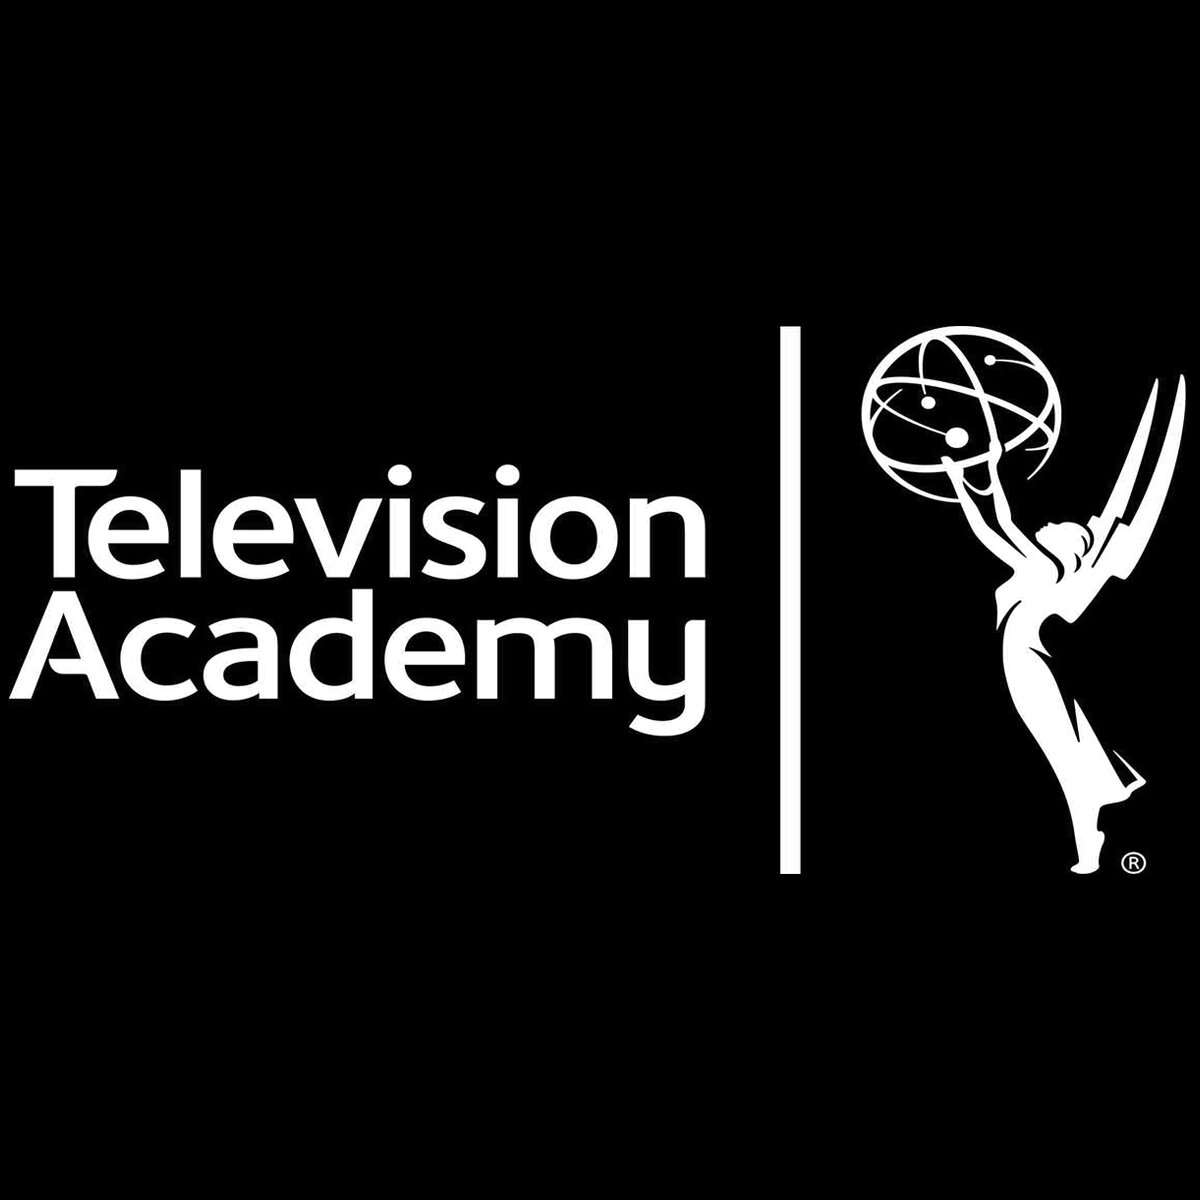 Television Academy ON BLACK 001 copy.jpg